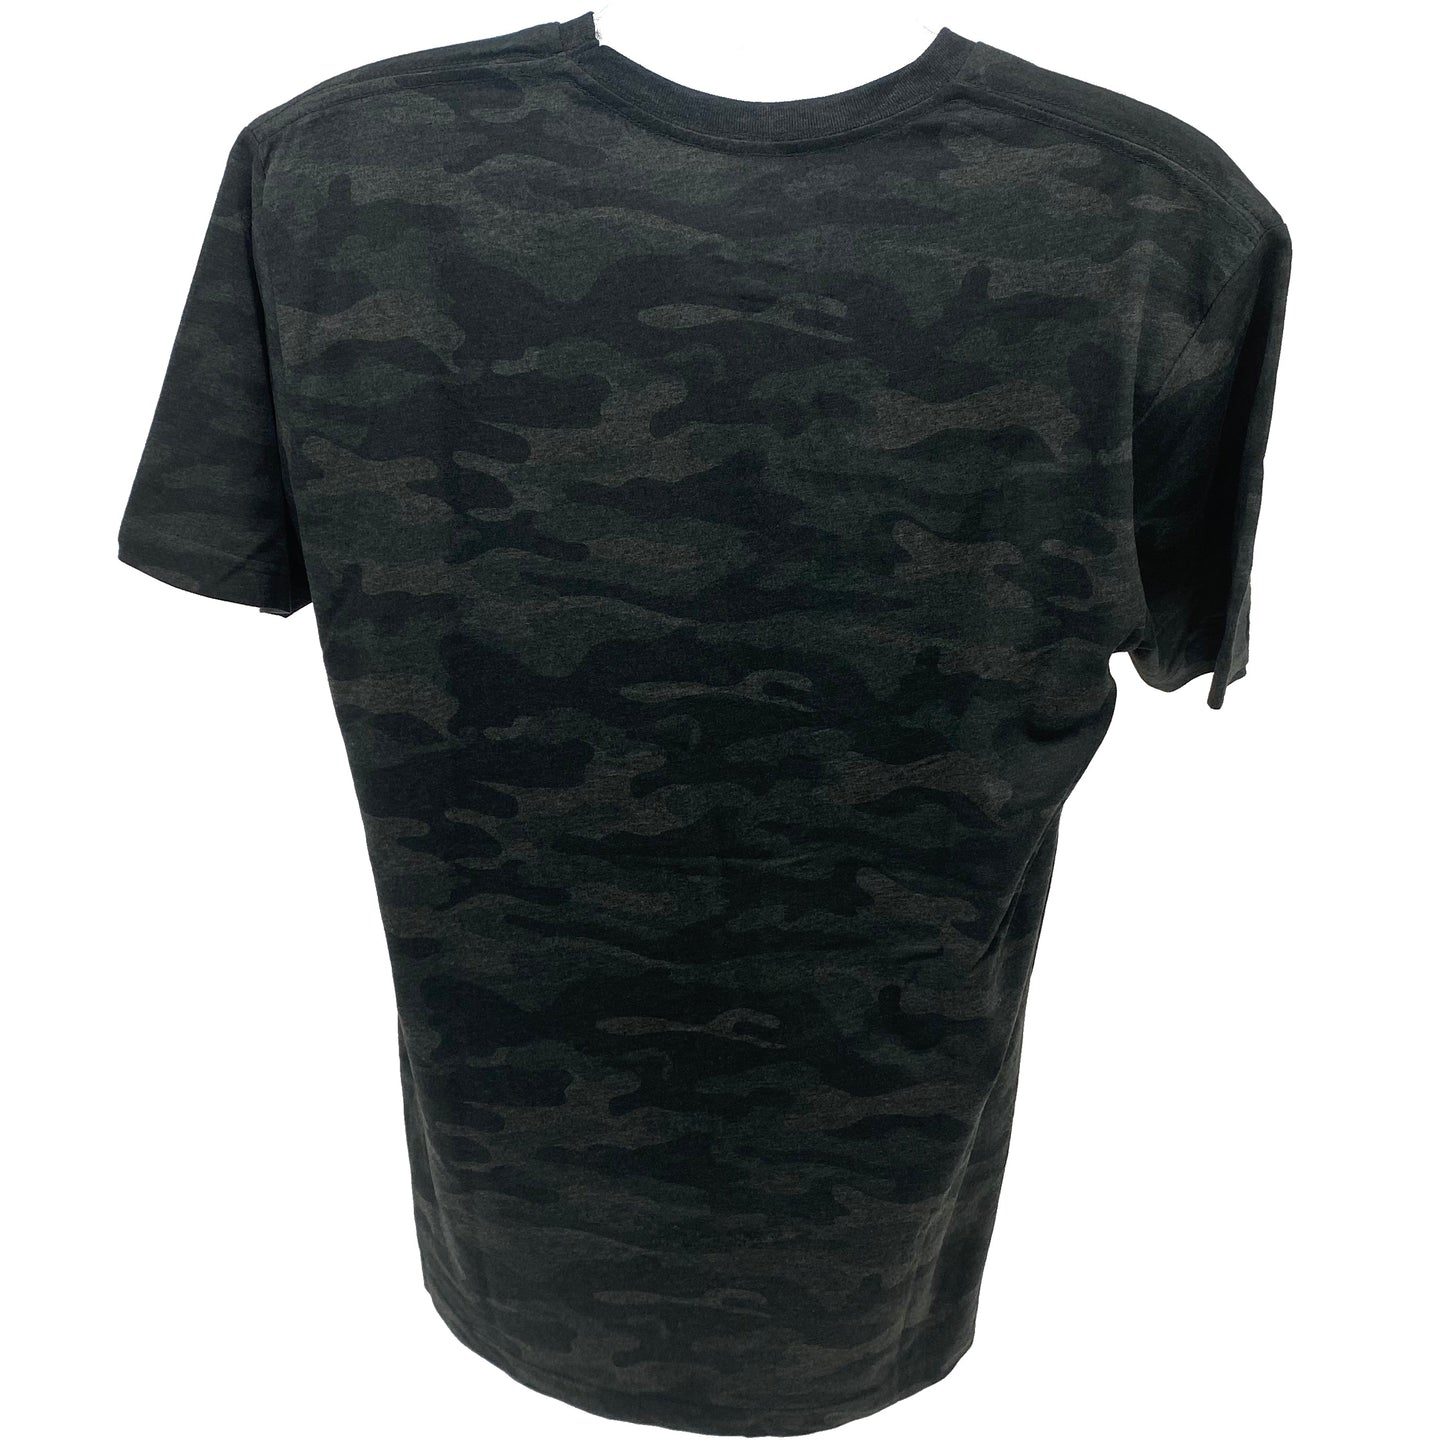 John Deere Mens Black Camo Short Sleeved T-Shirt Large - LP76922